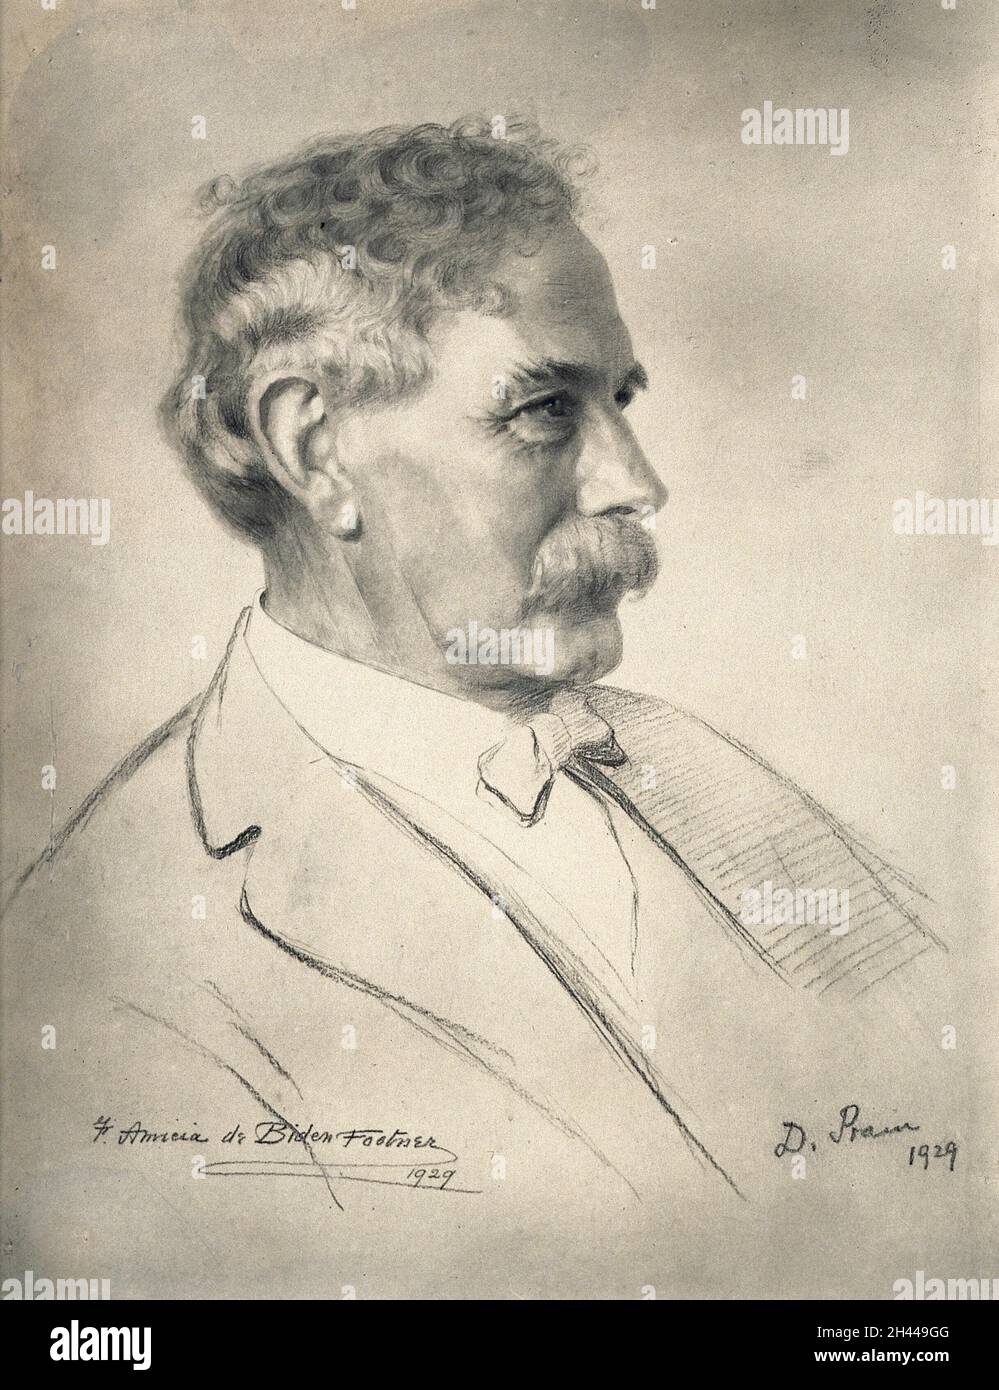 Sir David Prain. Photograph after a drawing by F.A. de Biden Footner, 1909. Stock Photo